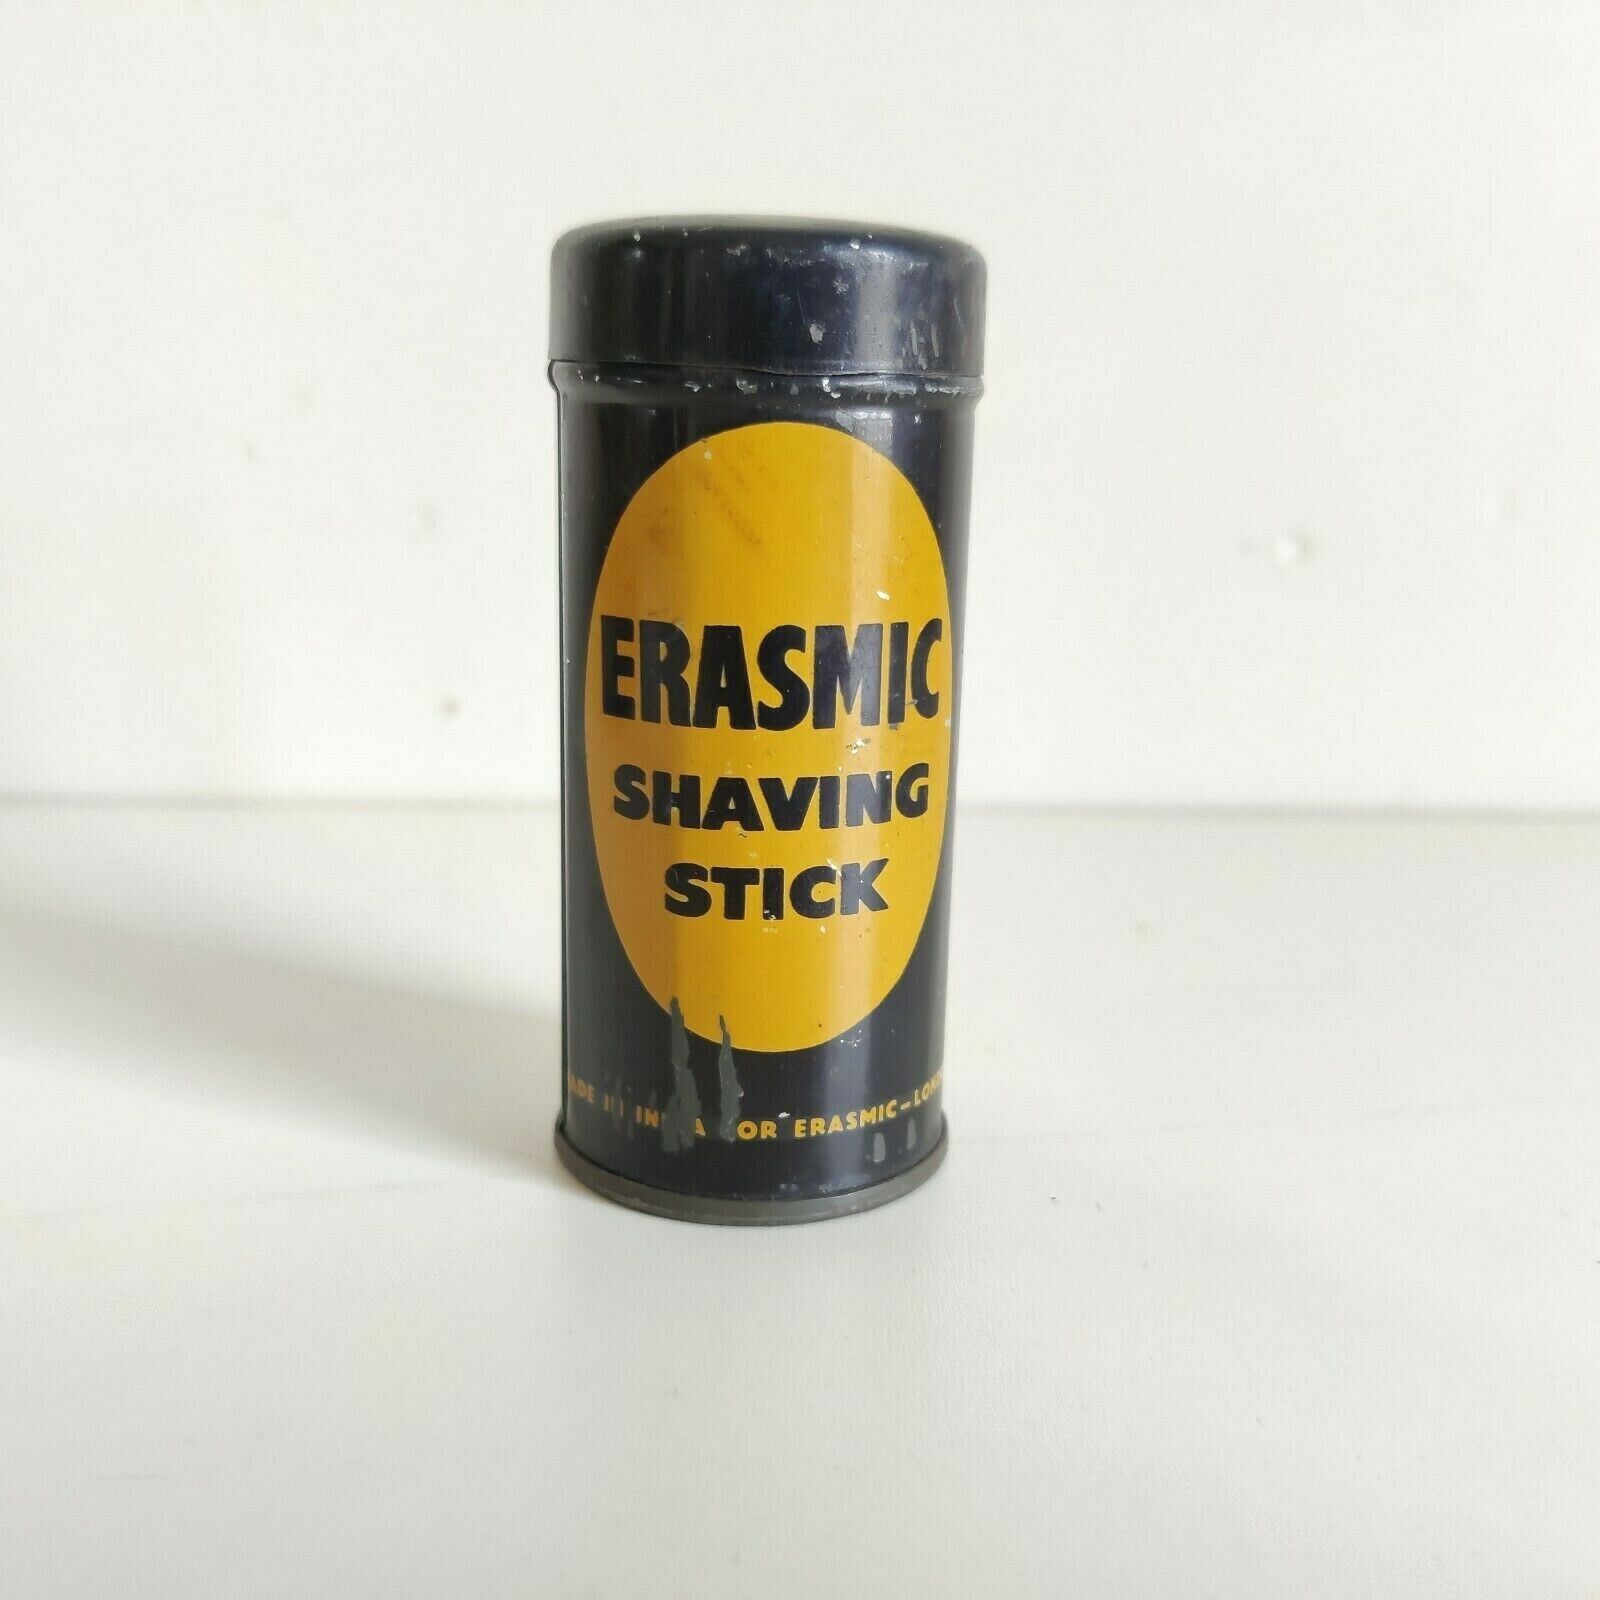 1940s Vintage Hindustan Lever Ltd. For Erasmic Shaving Stick Advertising Tin Box